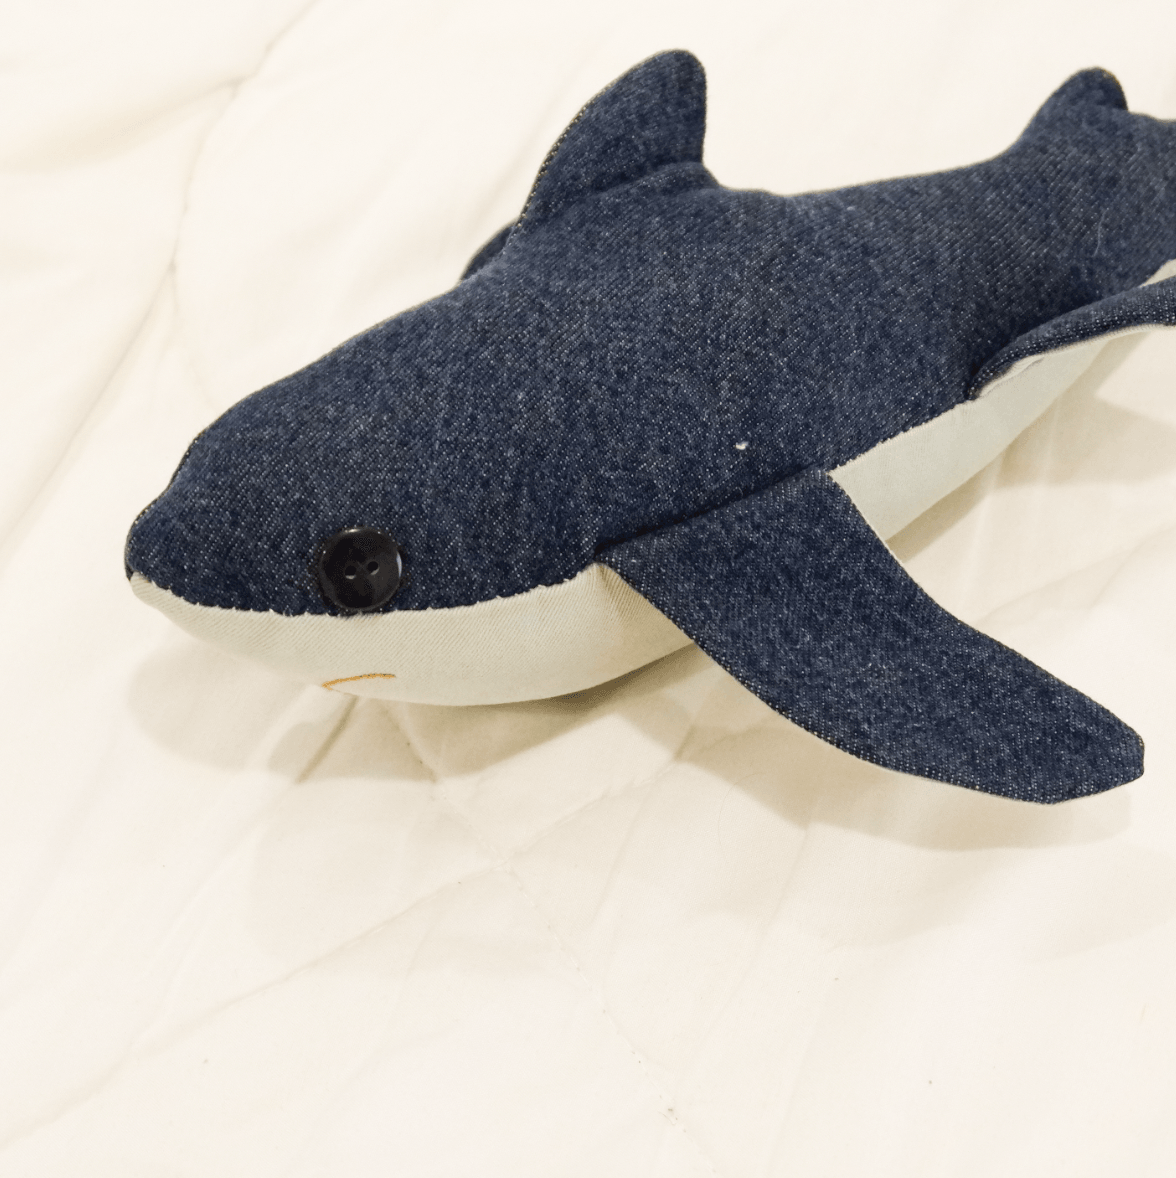 Iho The Thresher Shark Plush Toy - Simula PH